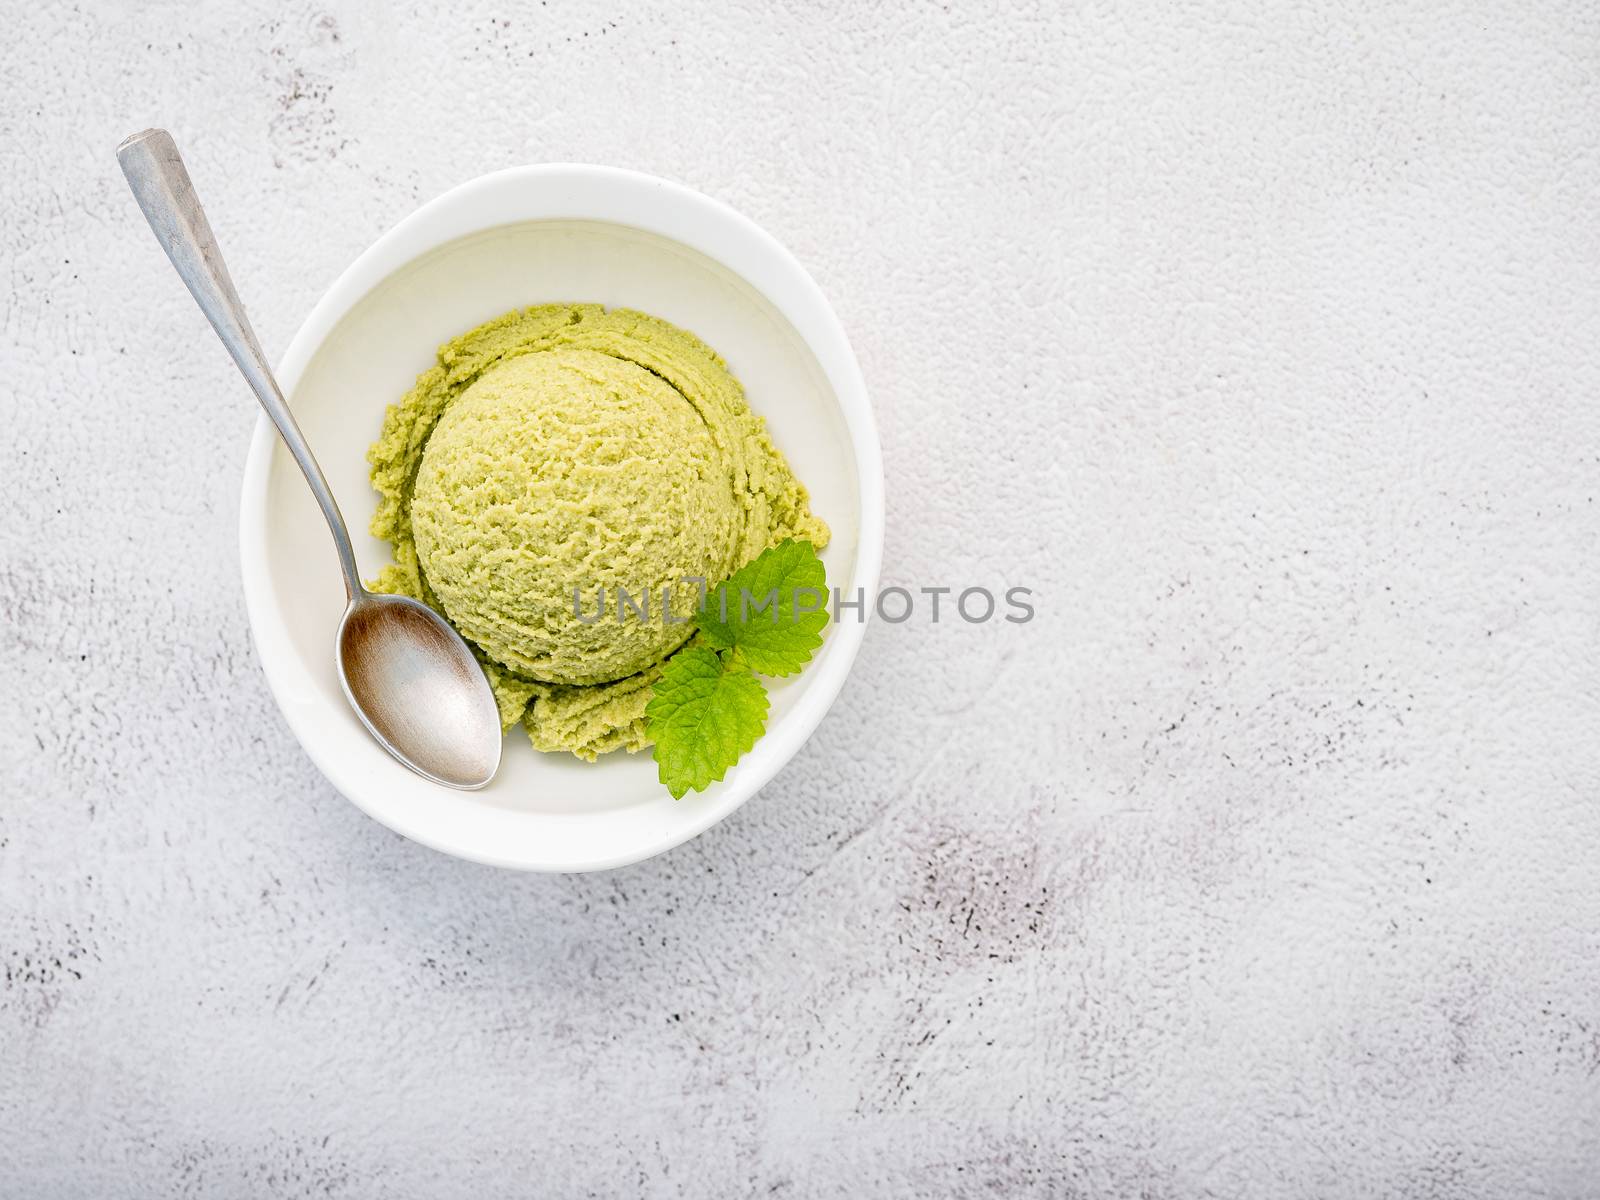 Matcha green tea ice cream with matcha whisk brush  setup on whi by kerdkanno